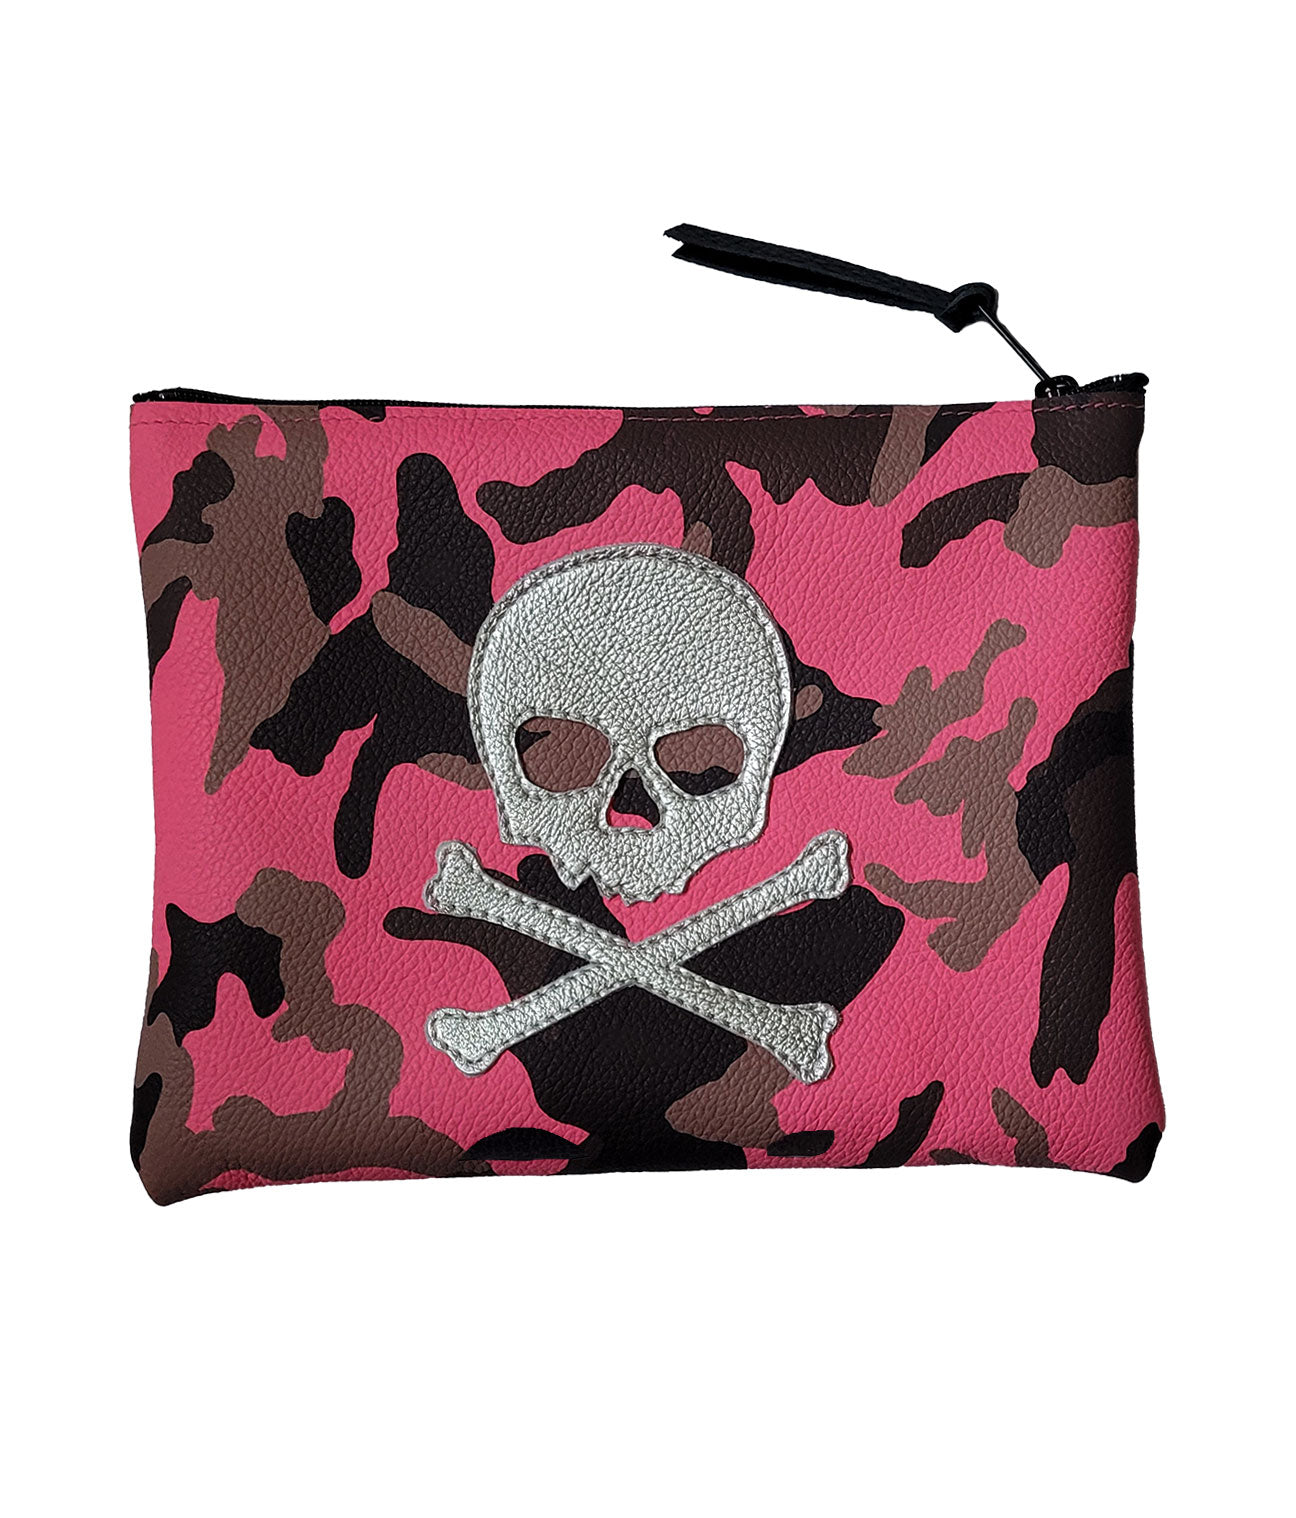 New! LTD Edition! Hot Pink Urban Camo Skull & Bones Valuables Bag - Robert Mark Golf